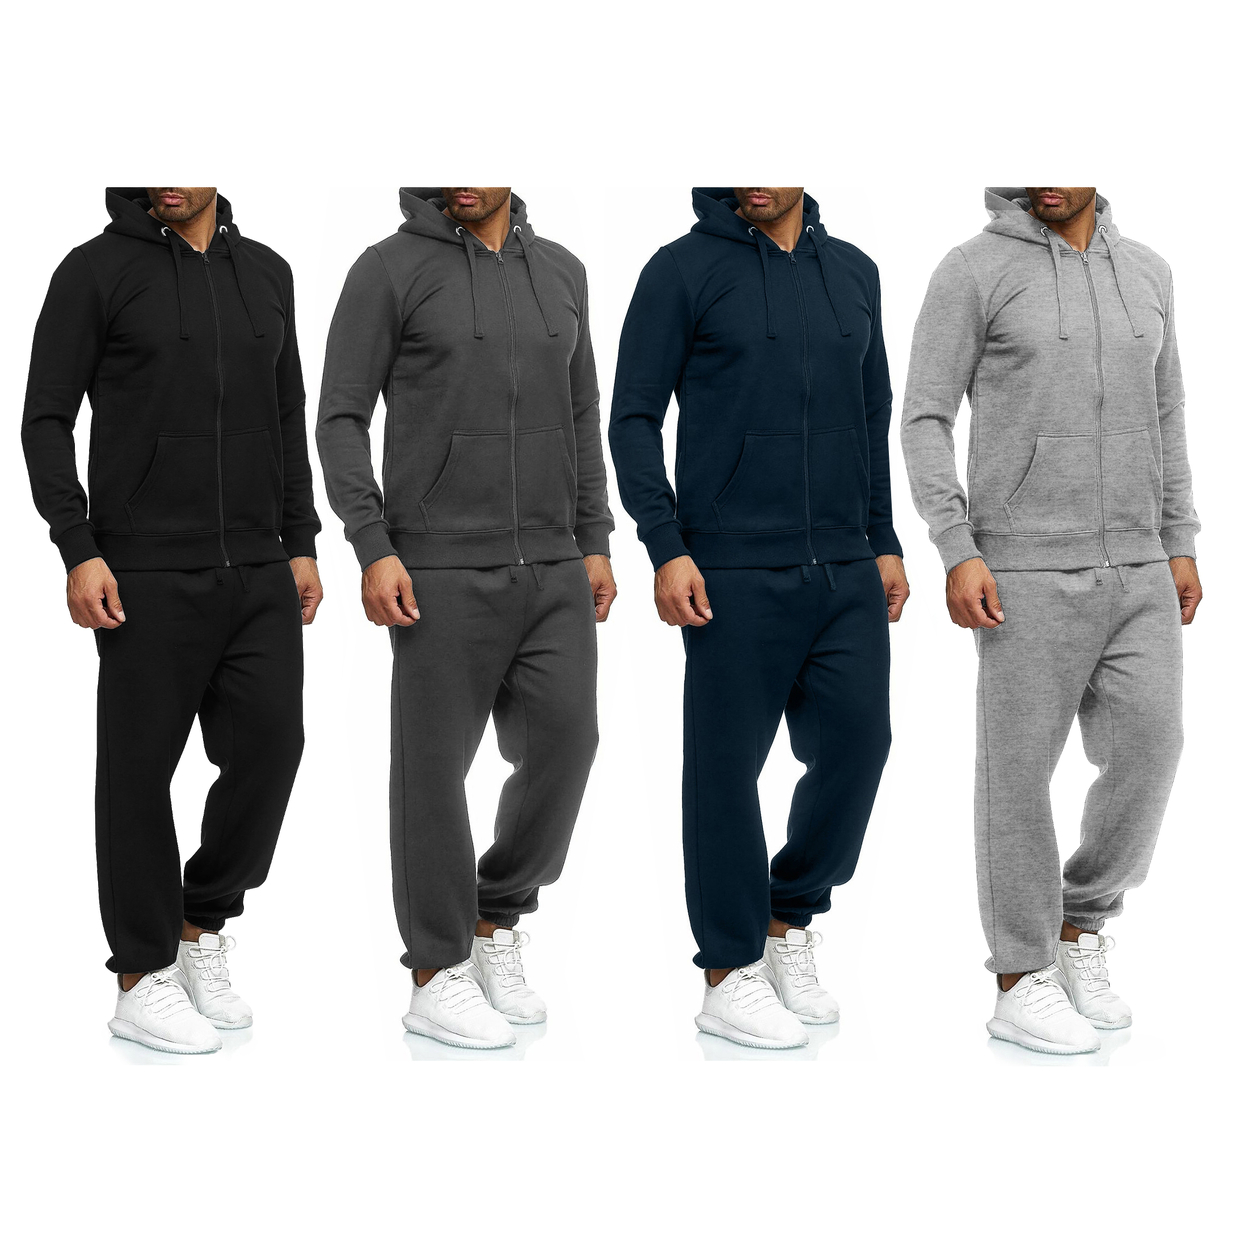 4-Piece: Men's Winter Warm Cozy Athletic Multi-Pockets BIG & TALL Sweatsuit Set - Navy, Xx-large